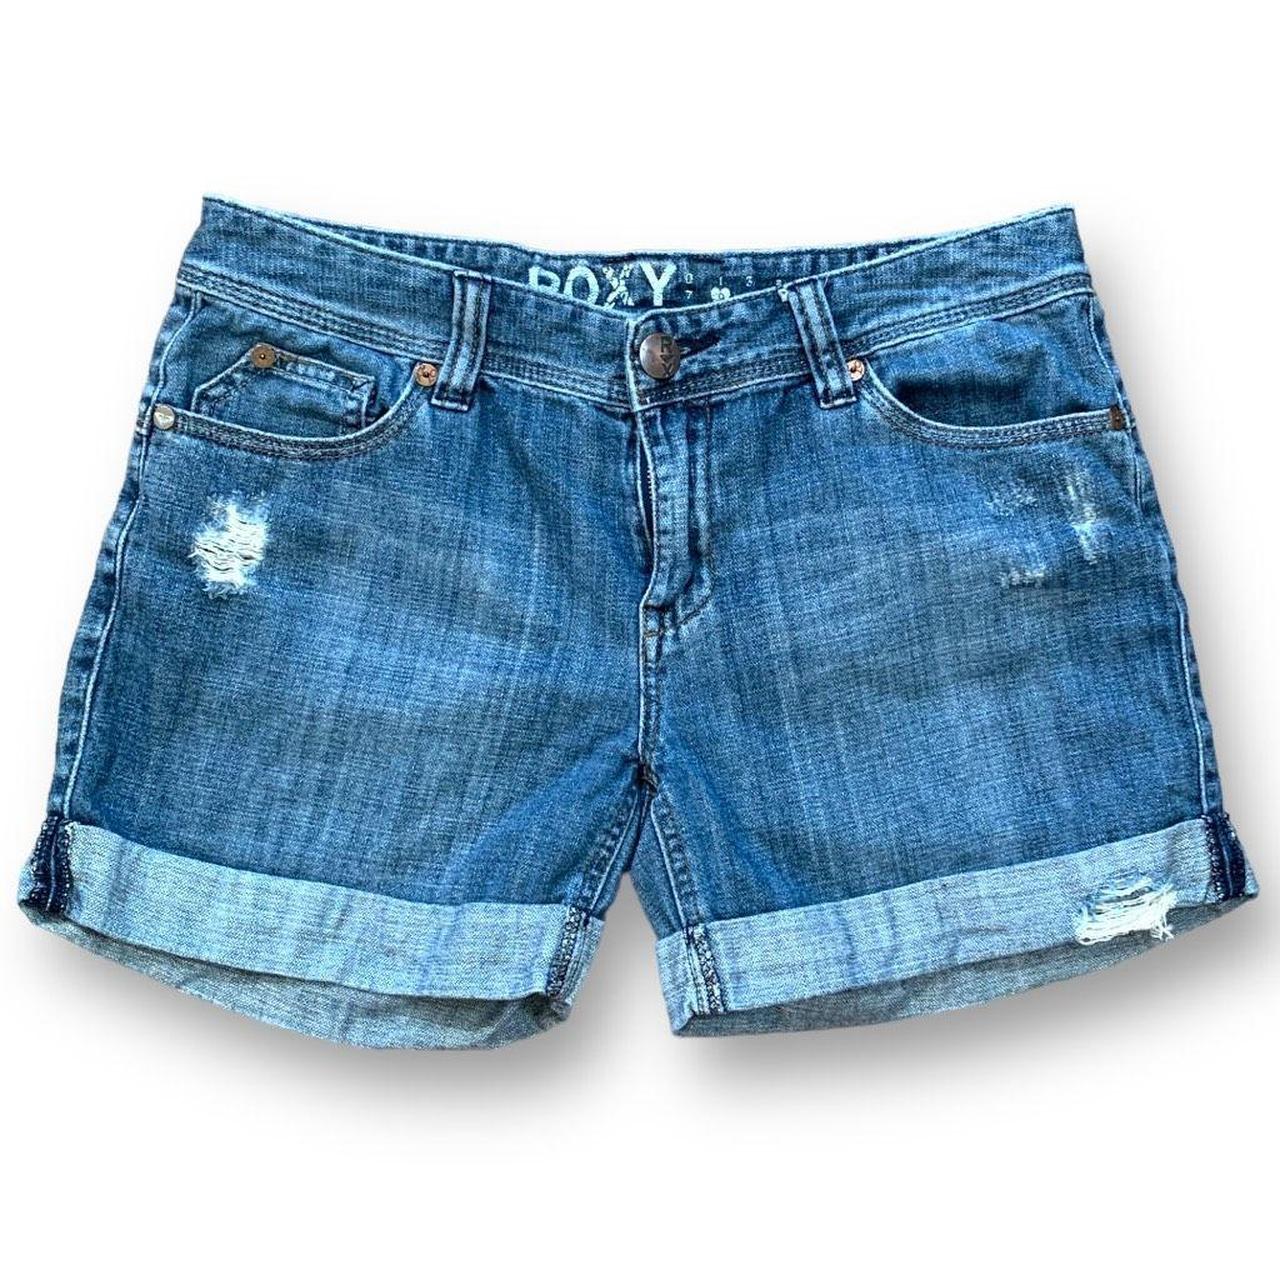 Washed organic denim shorts in dark blue and ivory